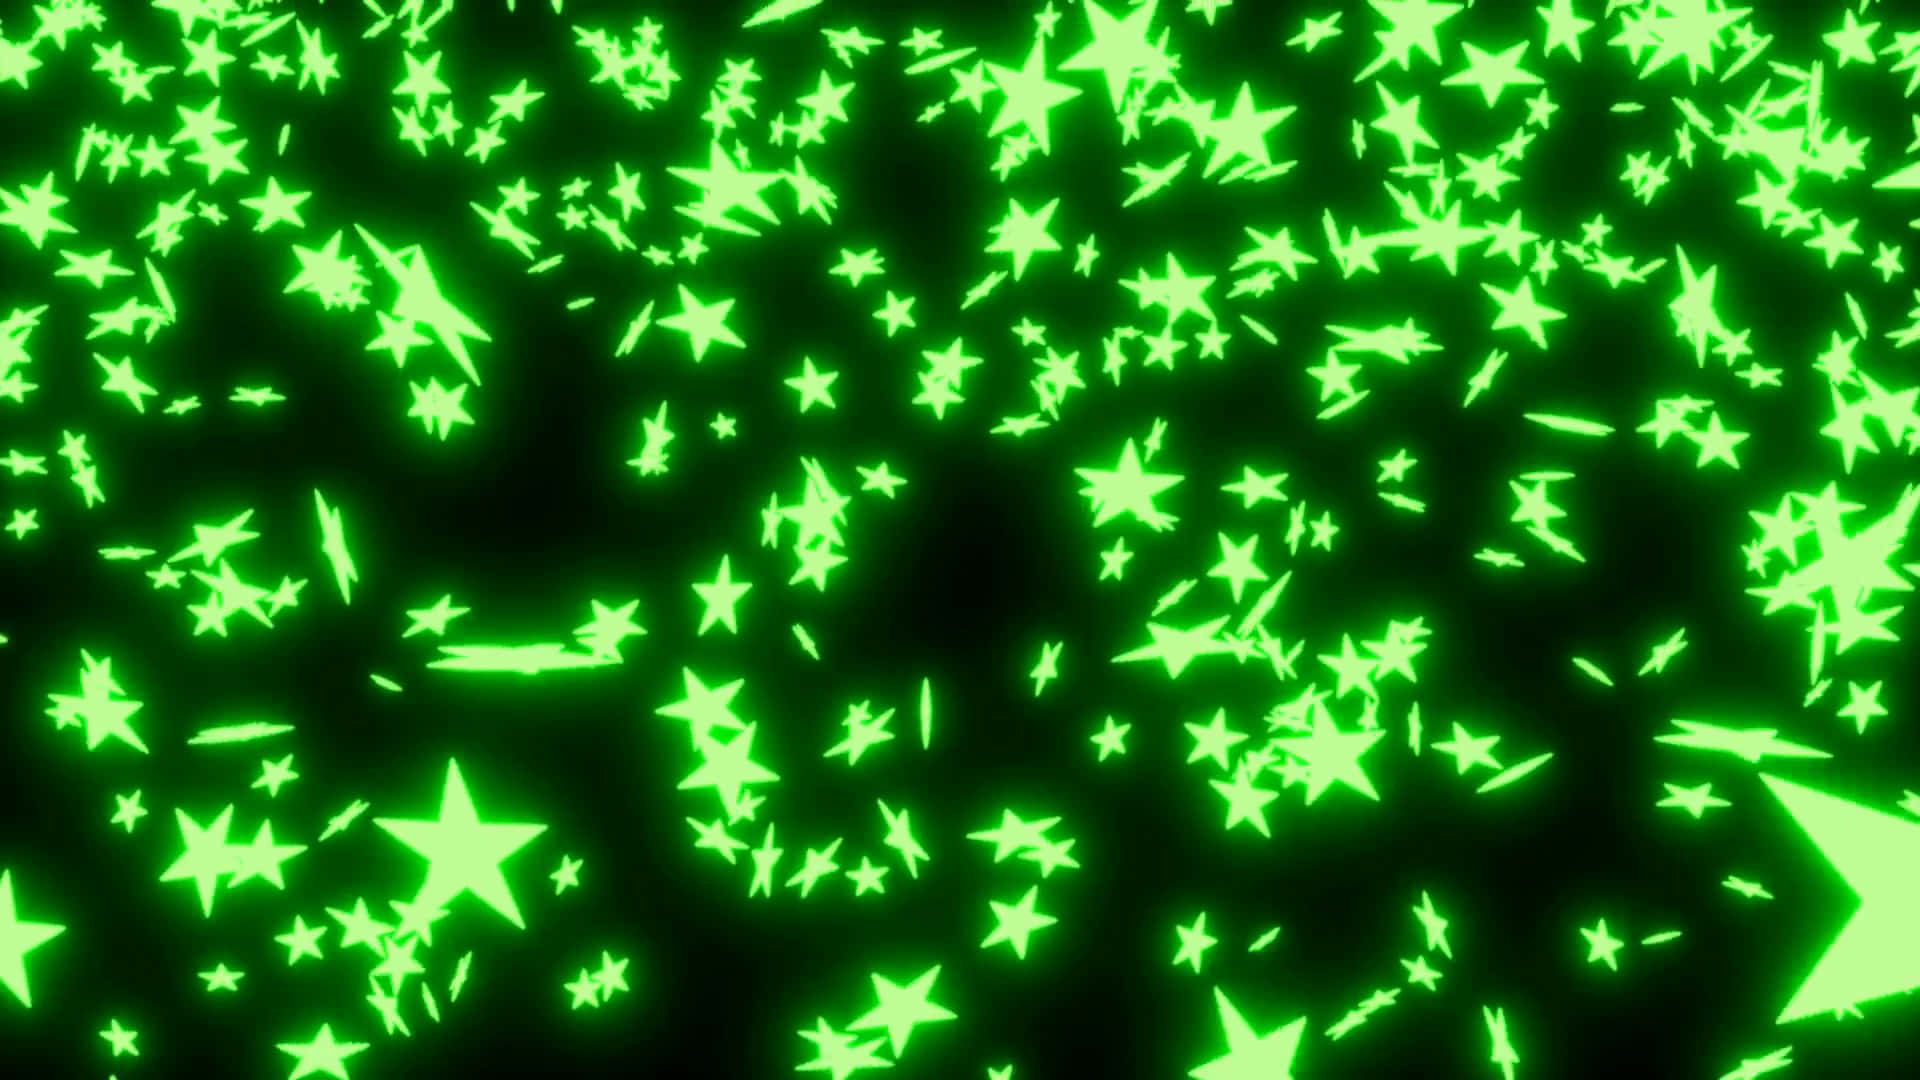 Neon Green Aesthetics for your Desktop Wallpaper